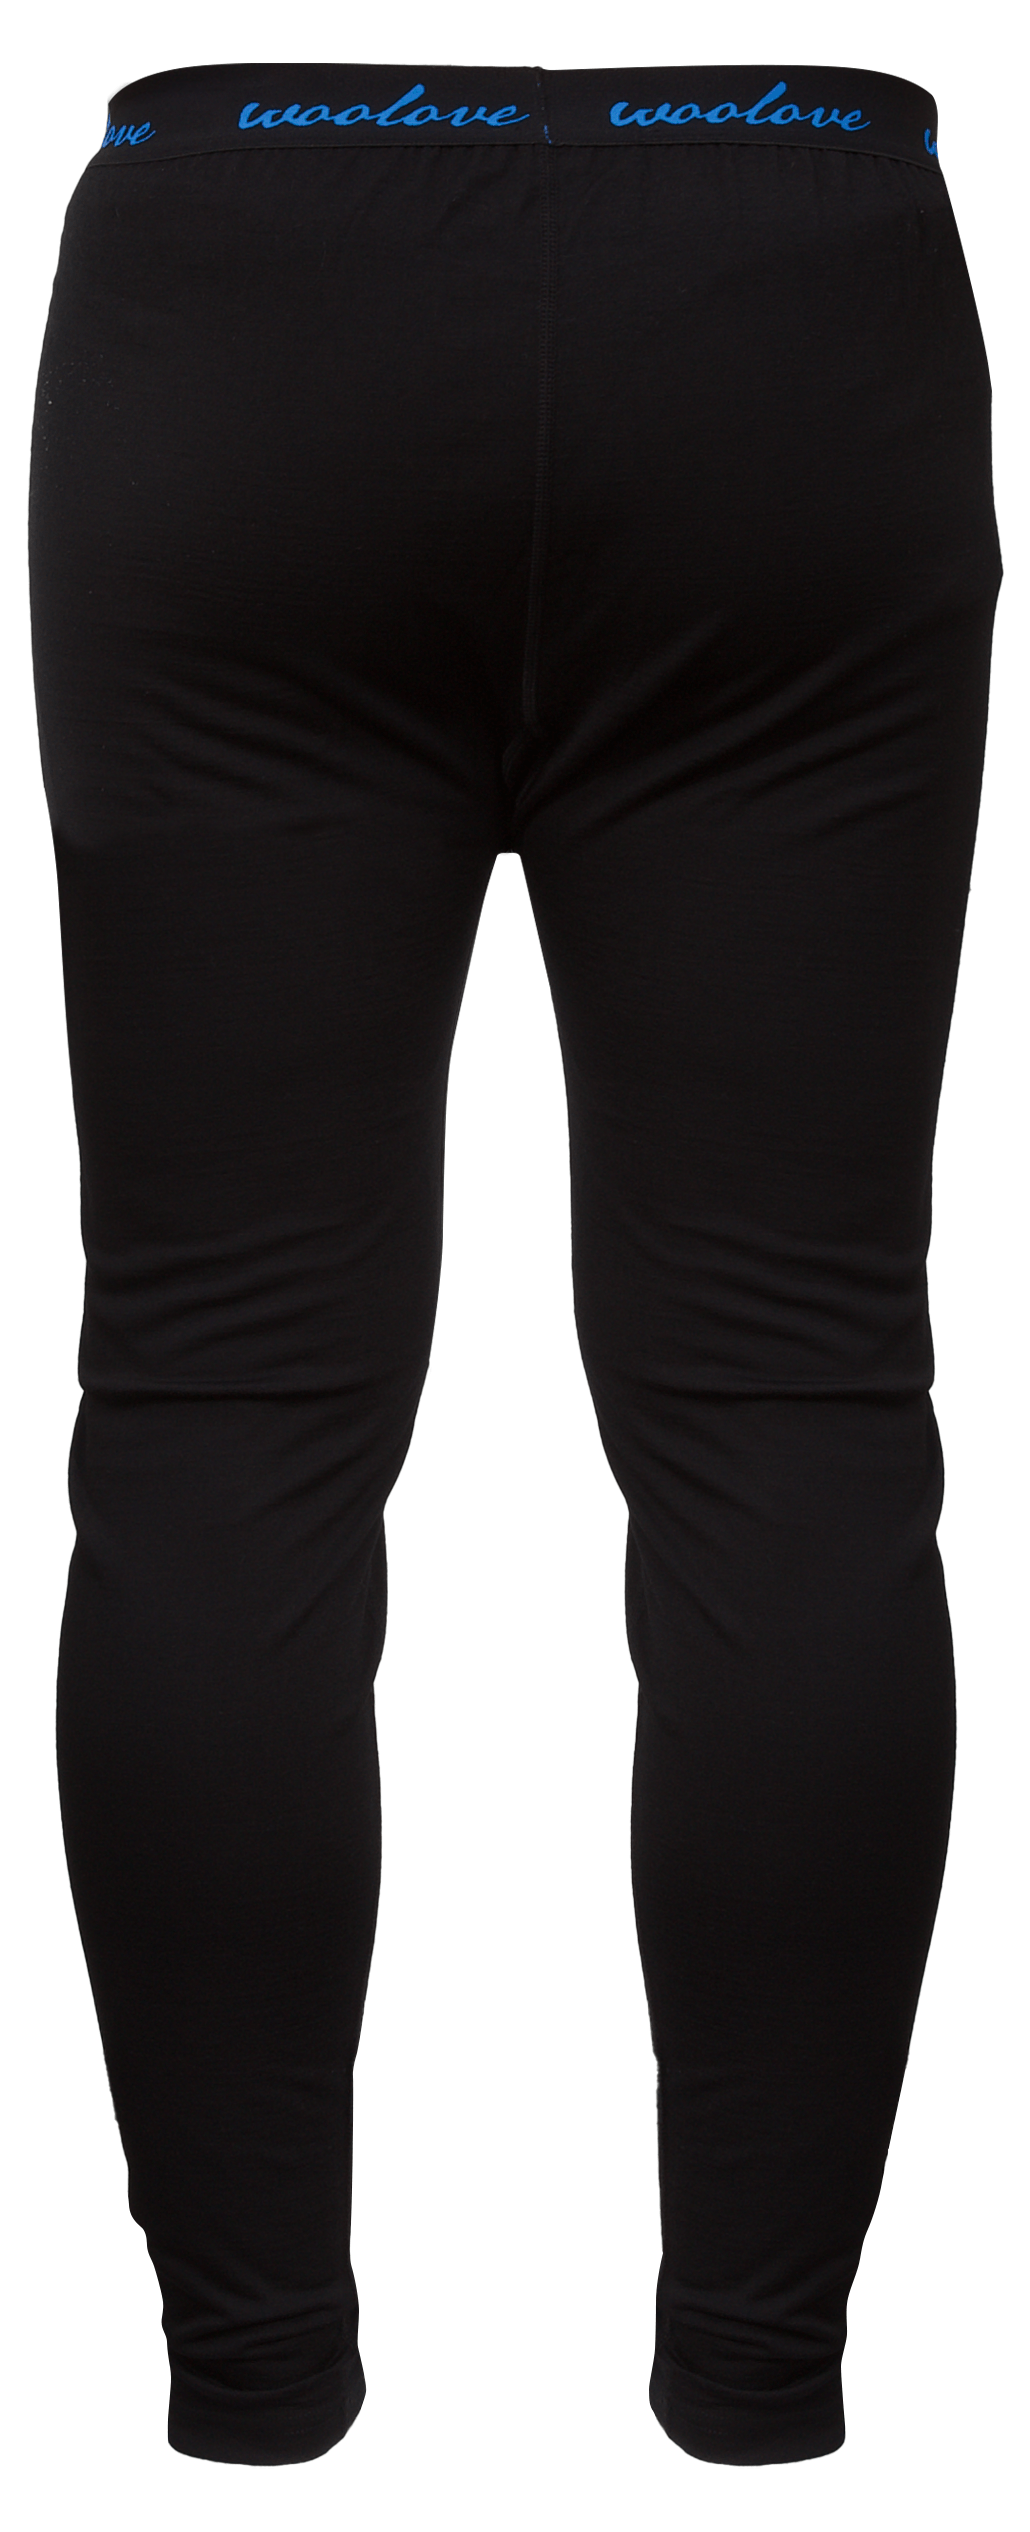 Men's 100% Merino Wool Long Underwear Base Layer Leggings 260 GSM - He